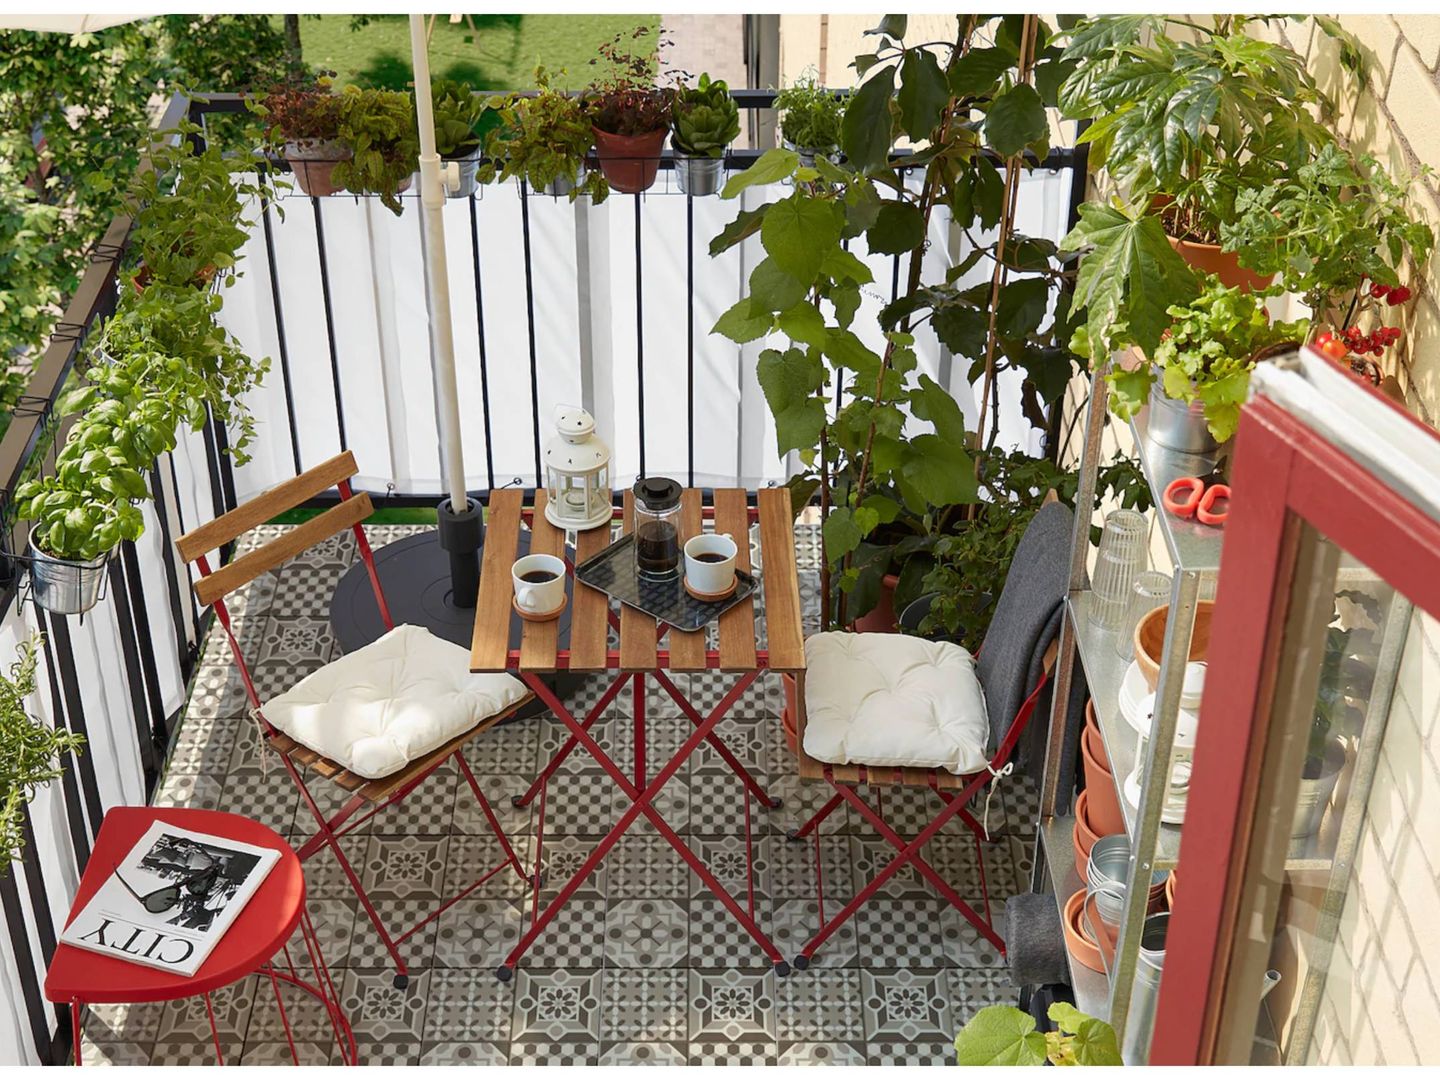 Ikea nos inspira para redecorar nuestro balcón. (Cortesía)